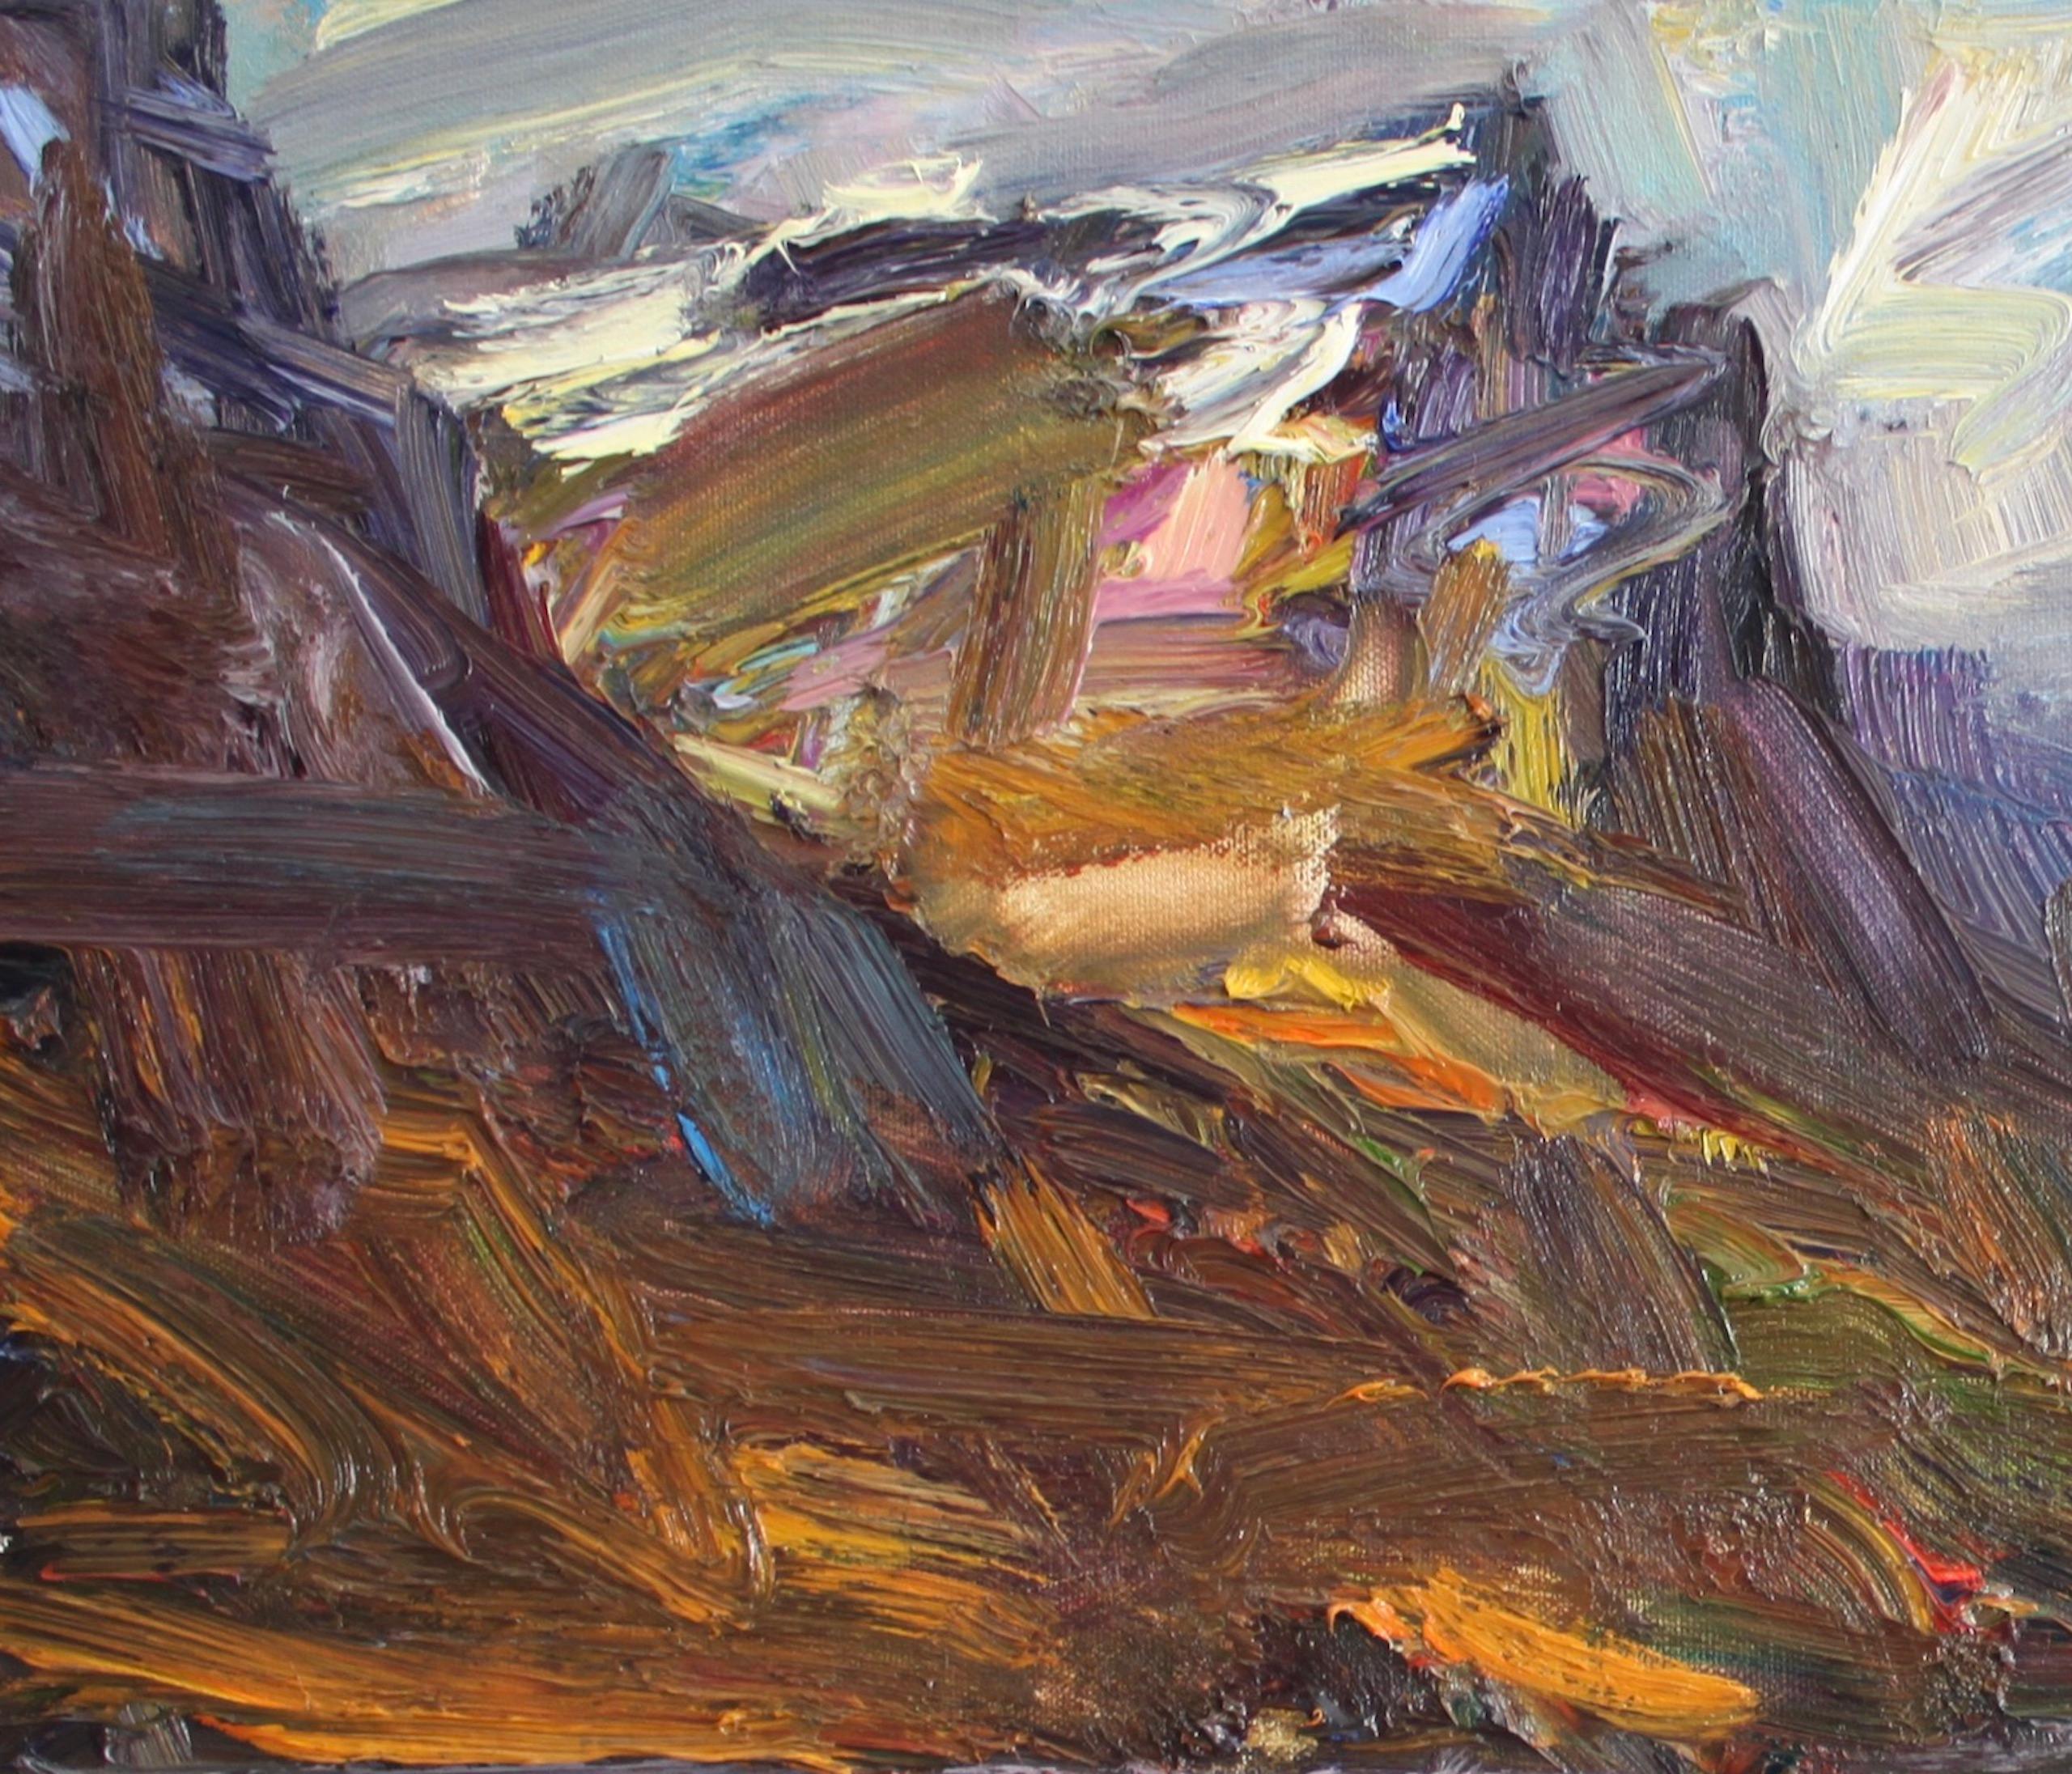 Loch nan Arr by Jonathan Shearer - Landscape oil painting, mountains, blue sky For Sale 2